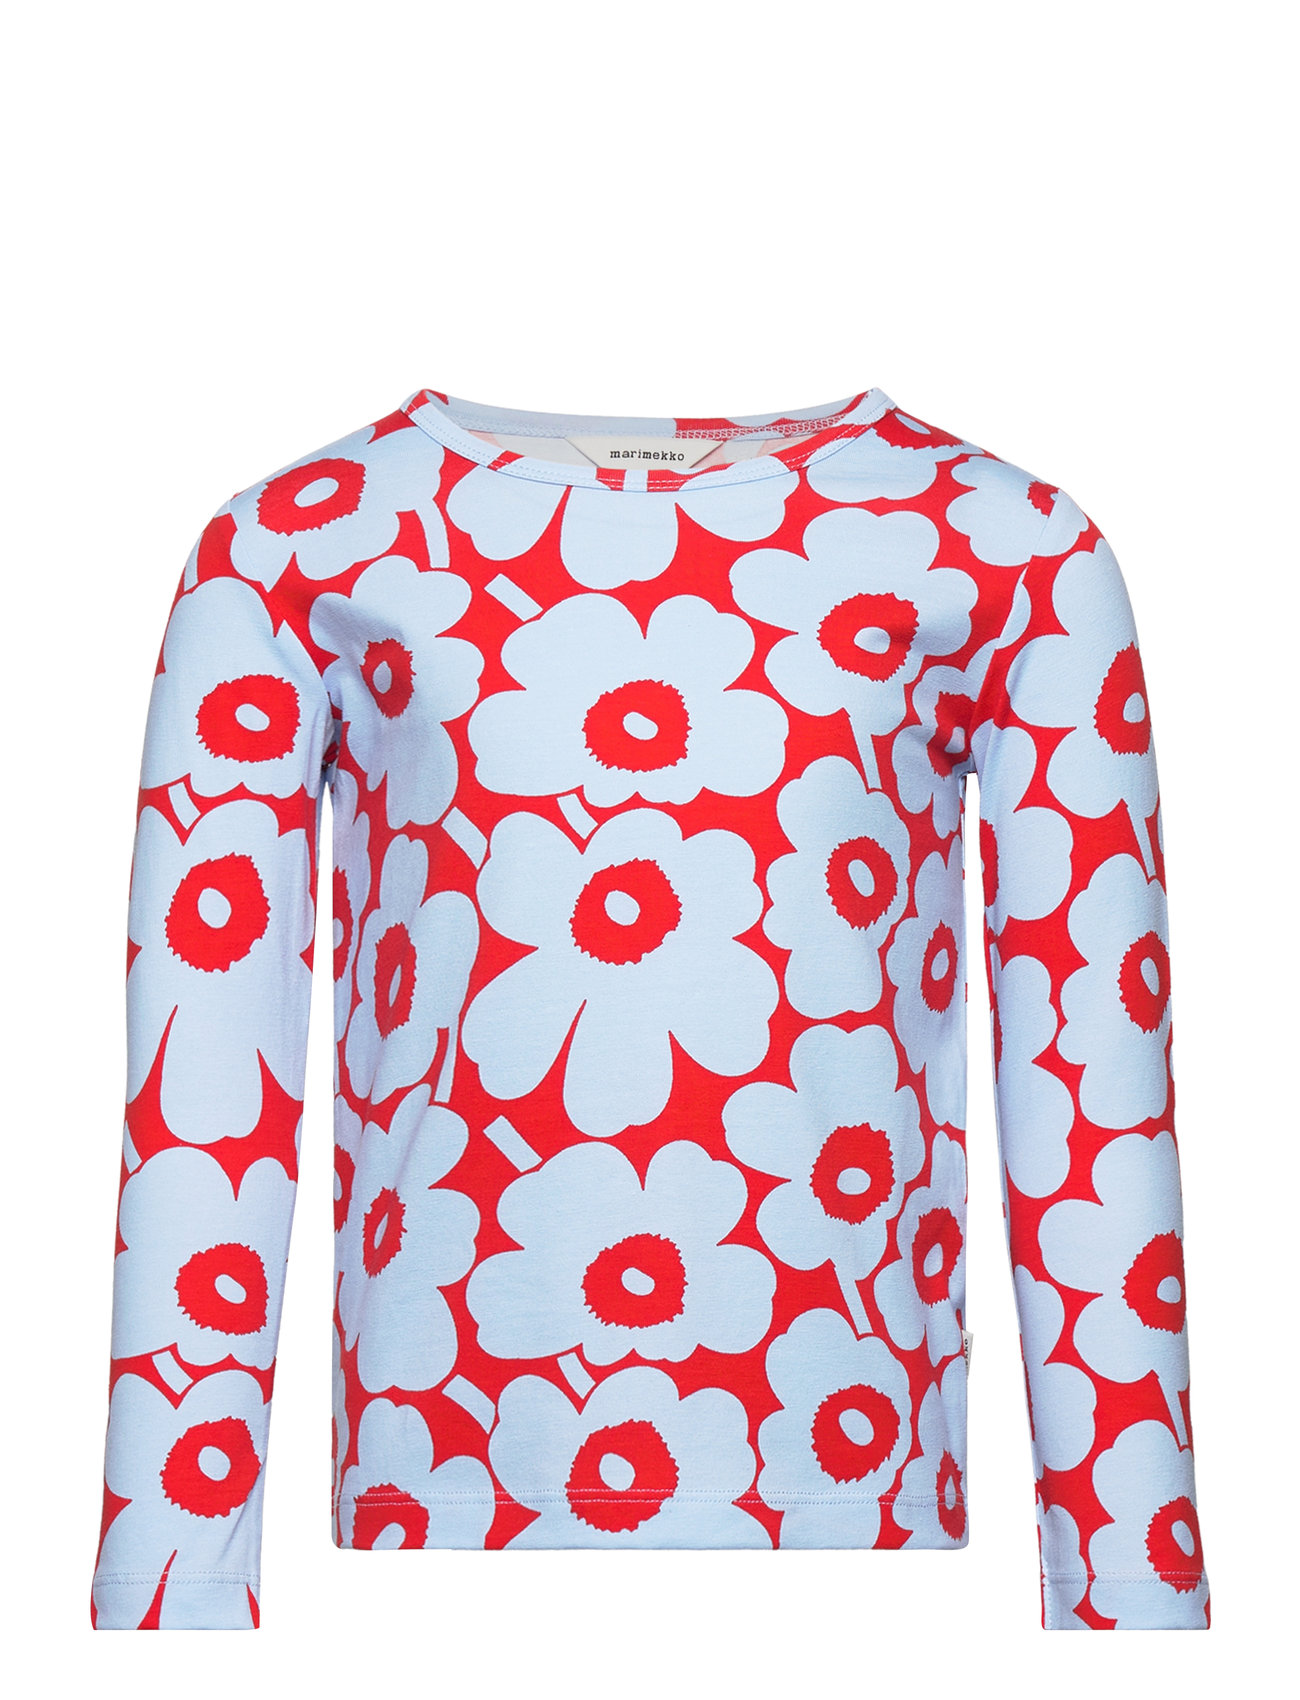 Ouli Mini Unikko Ii Tops T-shirts Long-sleeved T-shirts Multi/patterned Marimekko